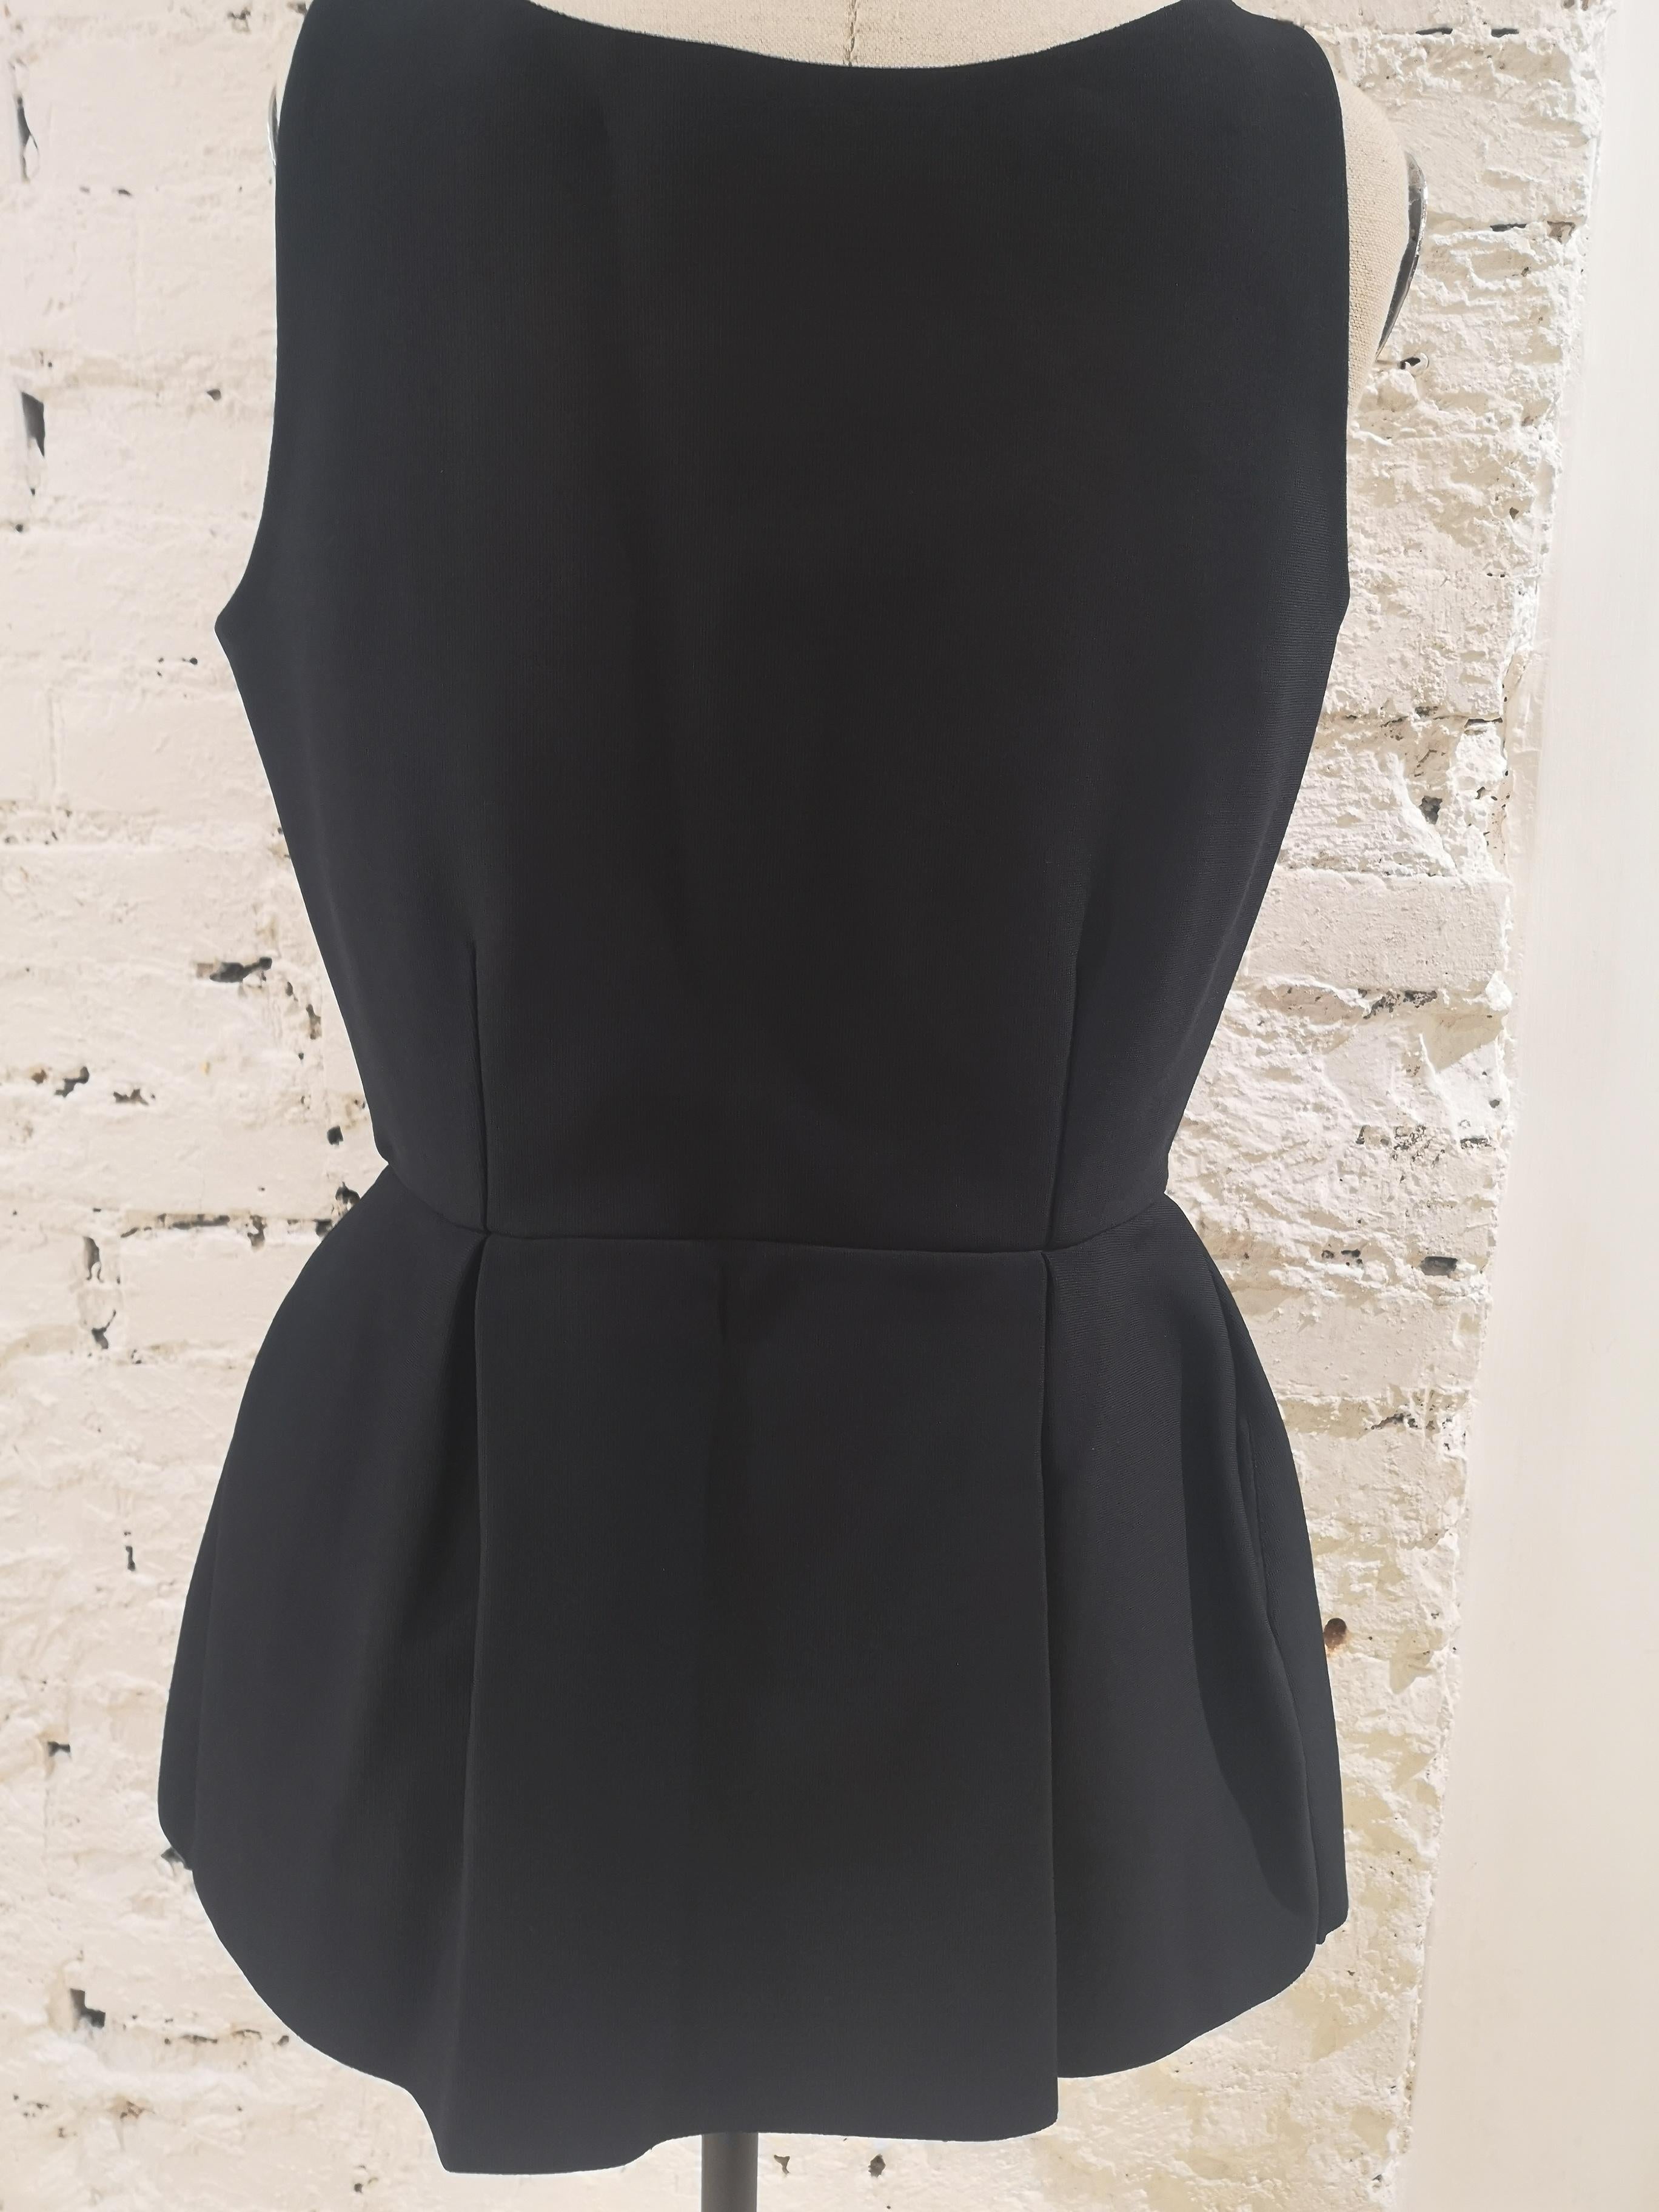 Women's or Men's Christian Dior Black dress For Sale